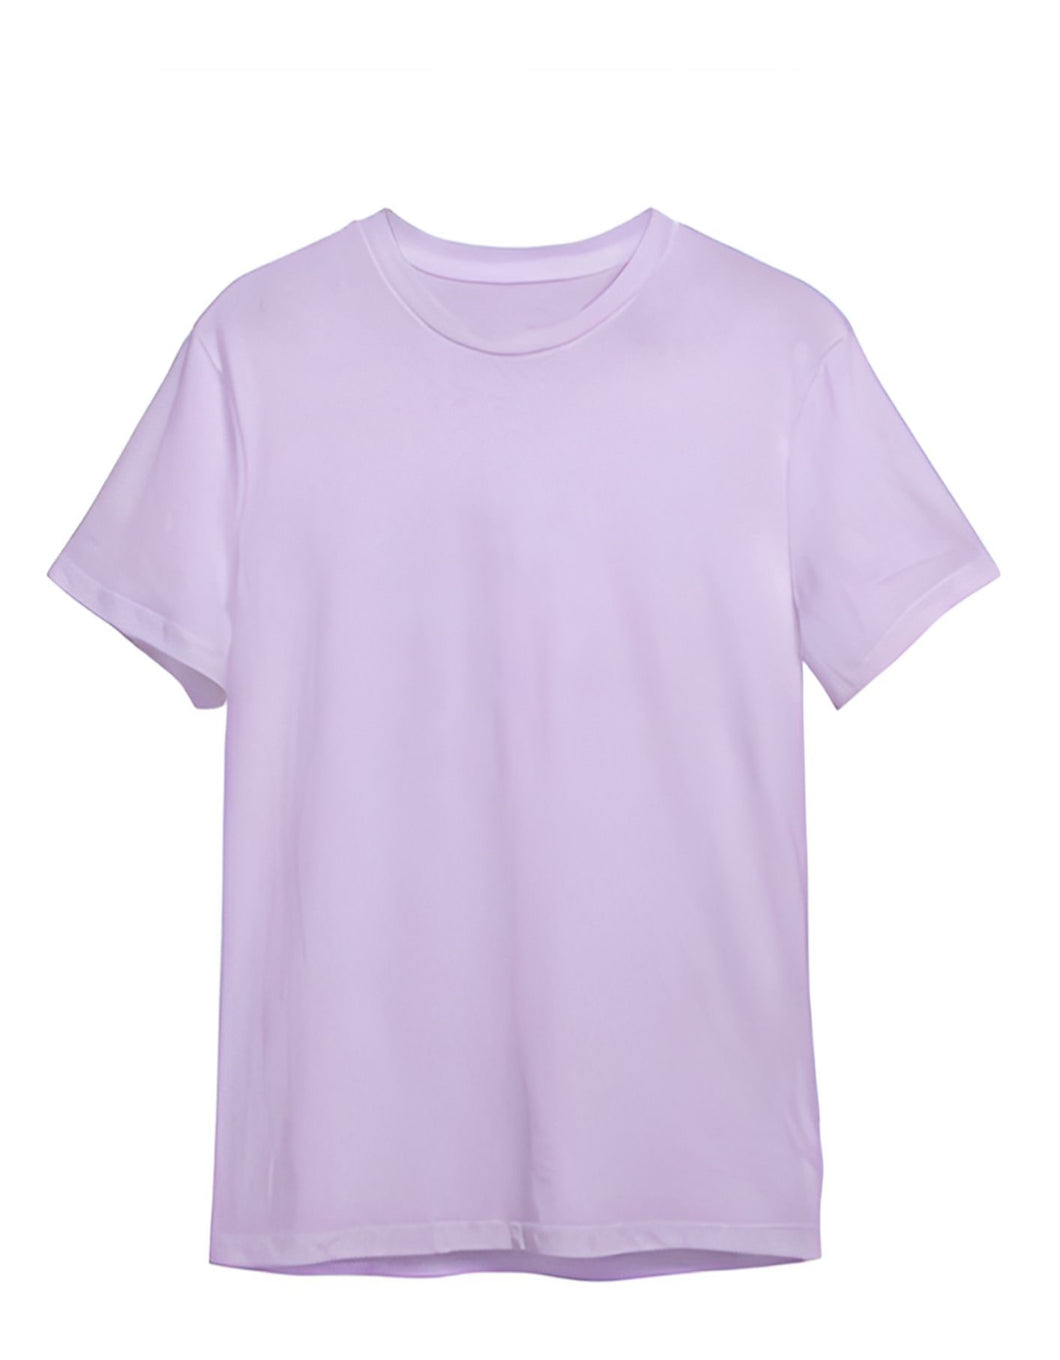 Undeez Basic Lilac T-Shirt